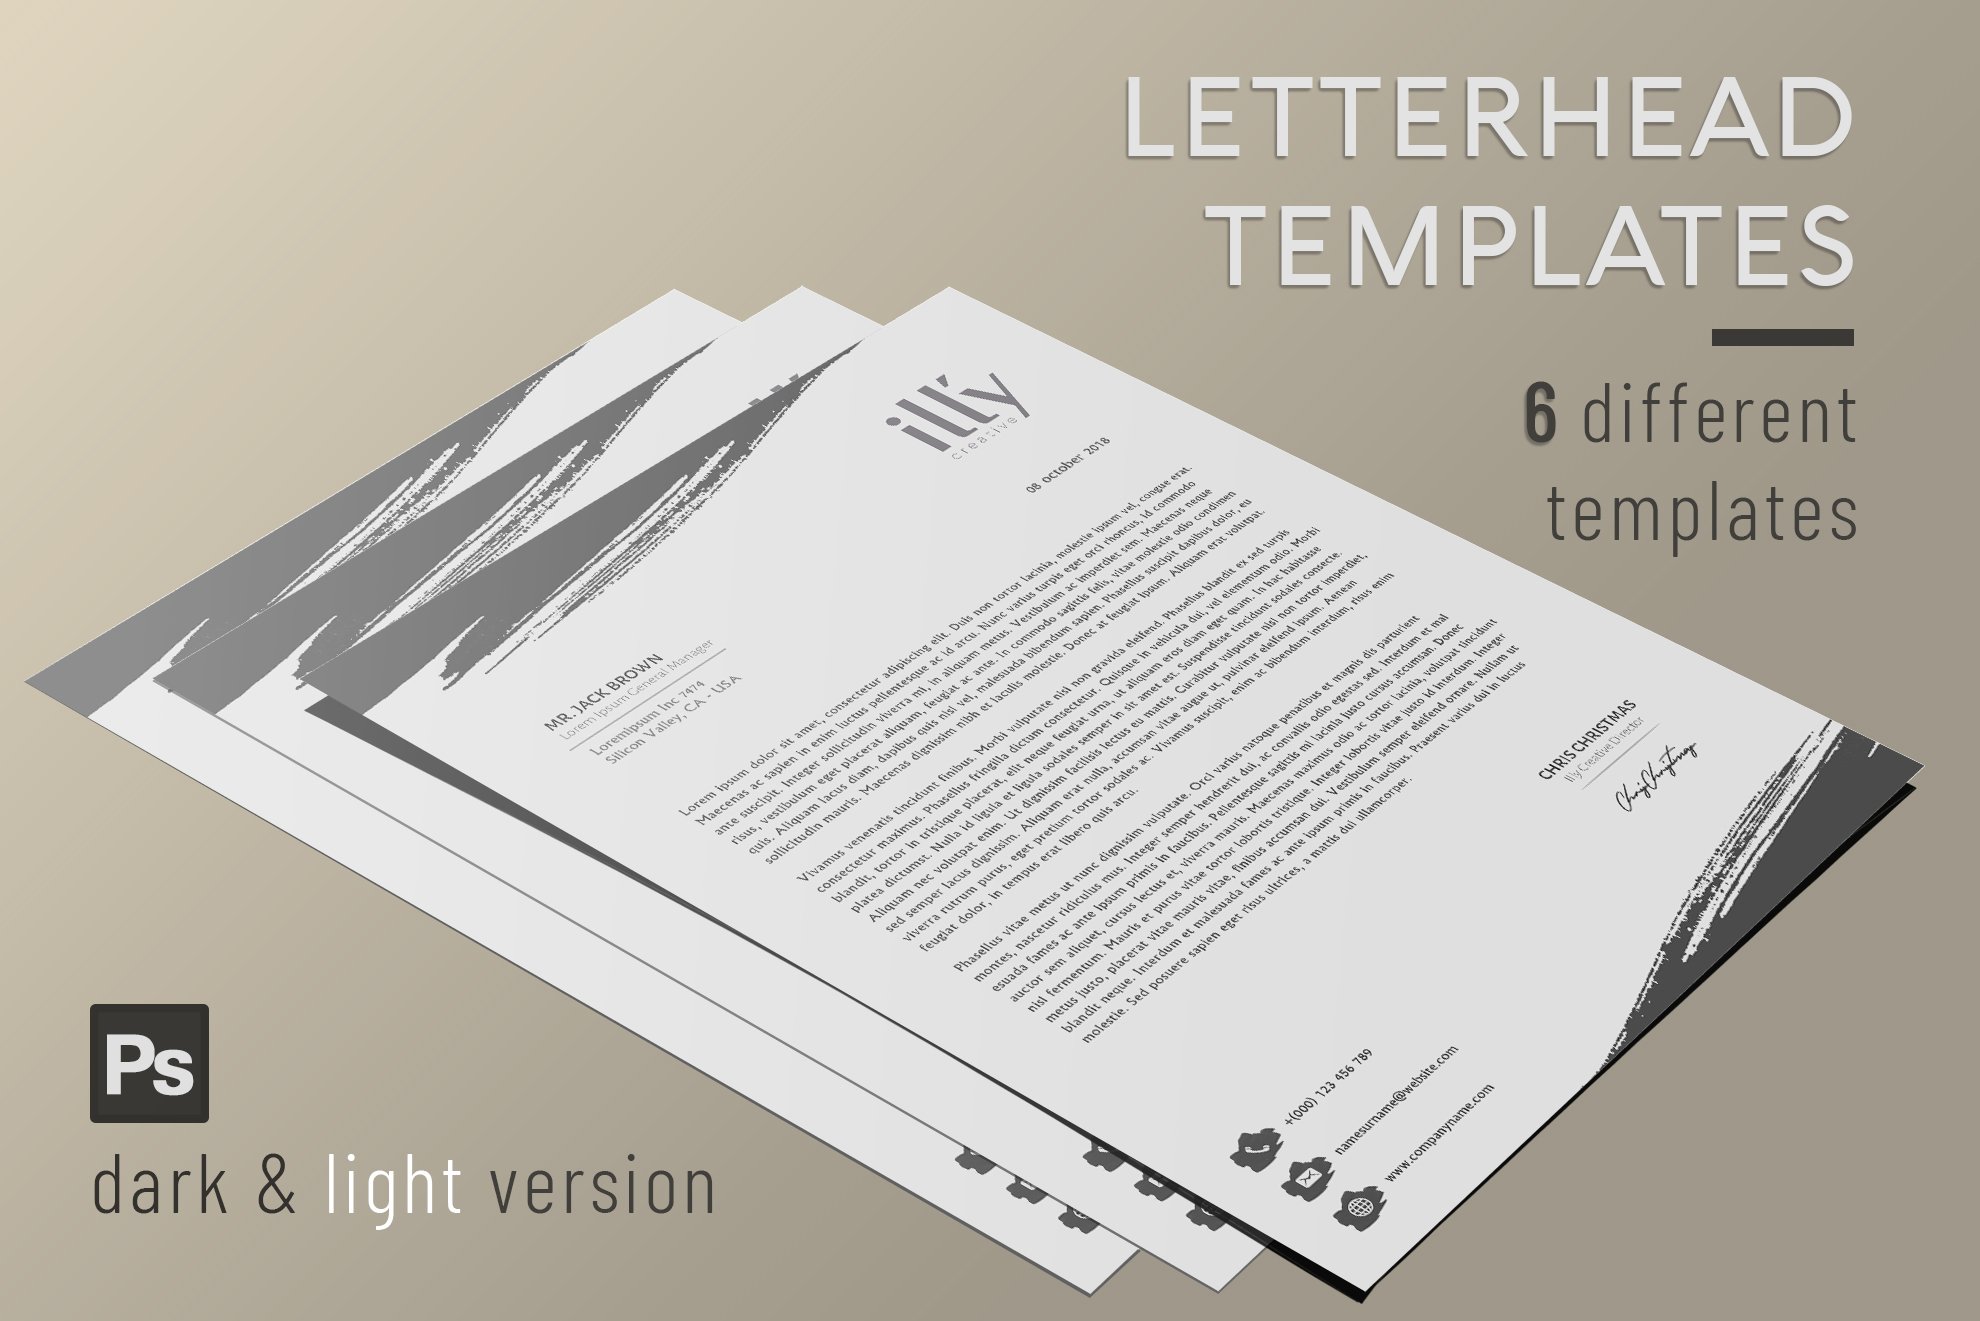 Letterhead Template - Creative Brush cover image.